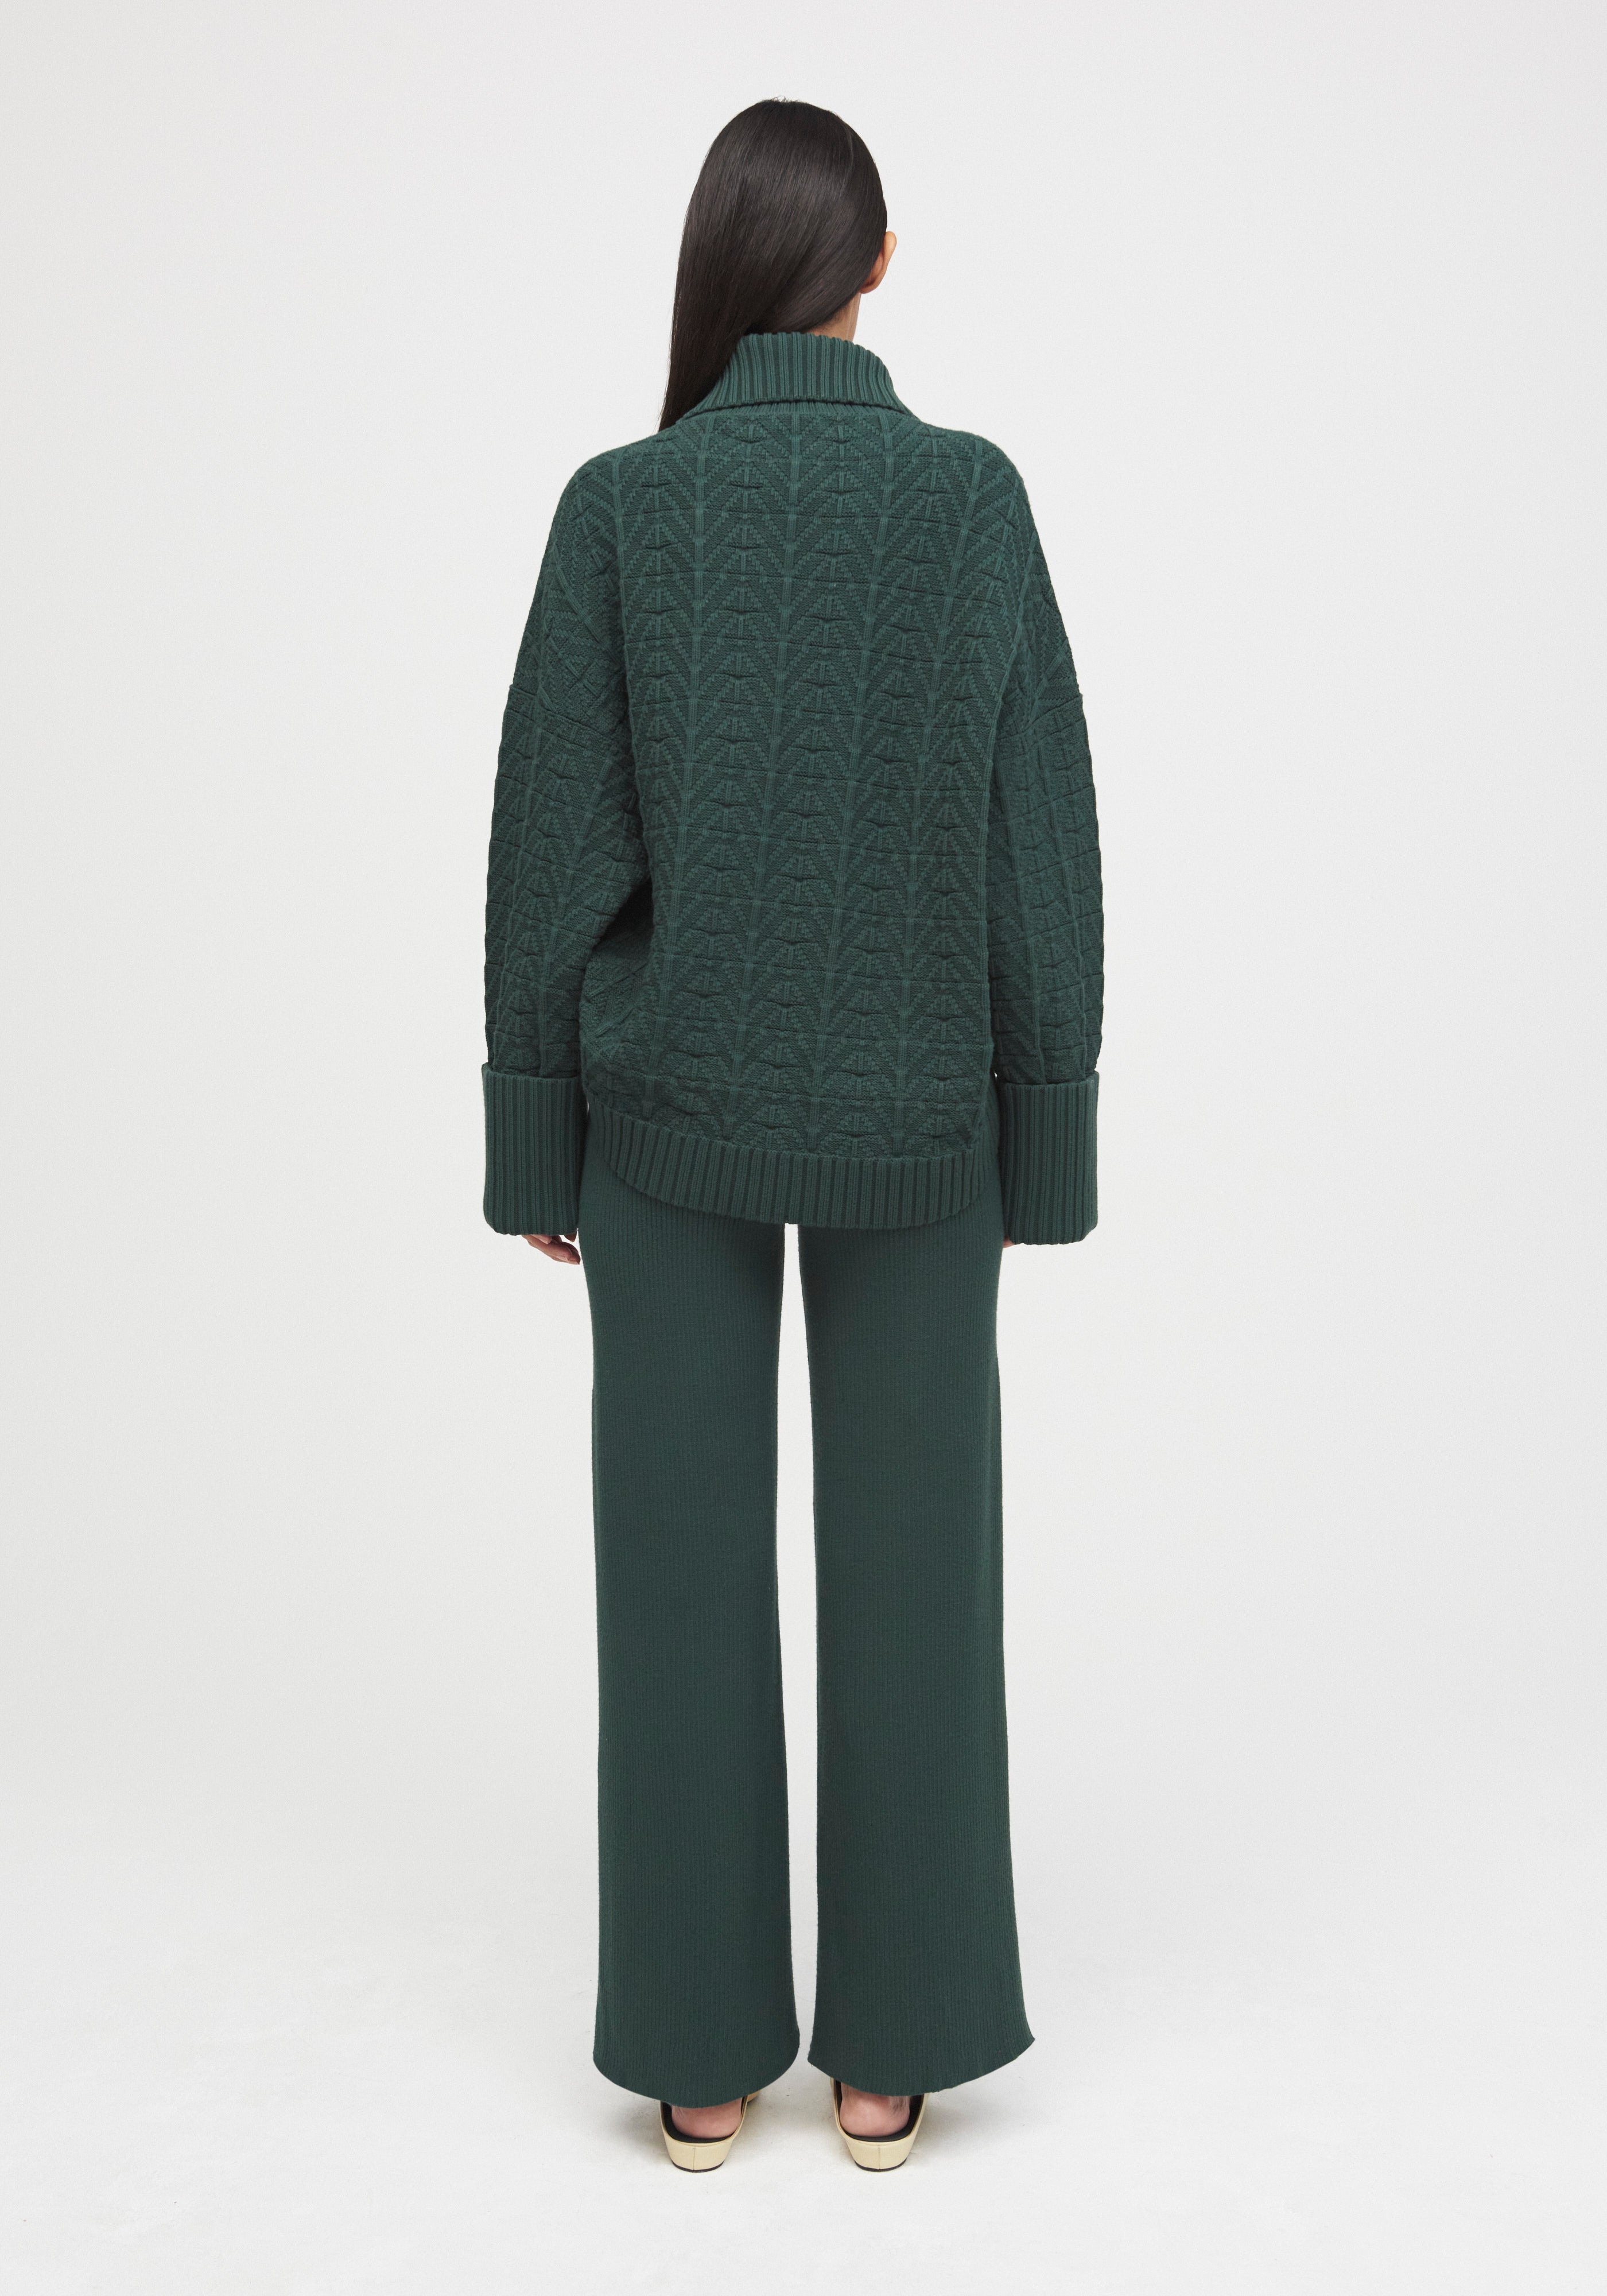 AERON LIA Ribbed-knit culotte pants – emerald